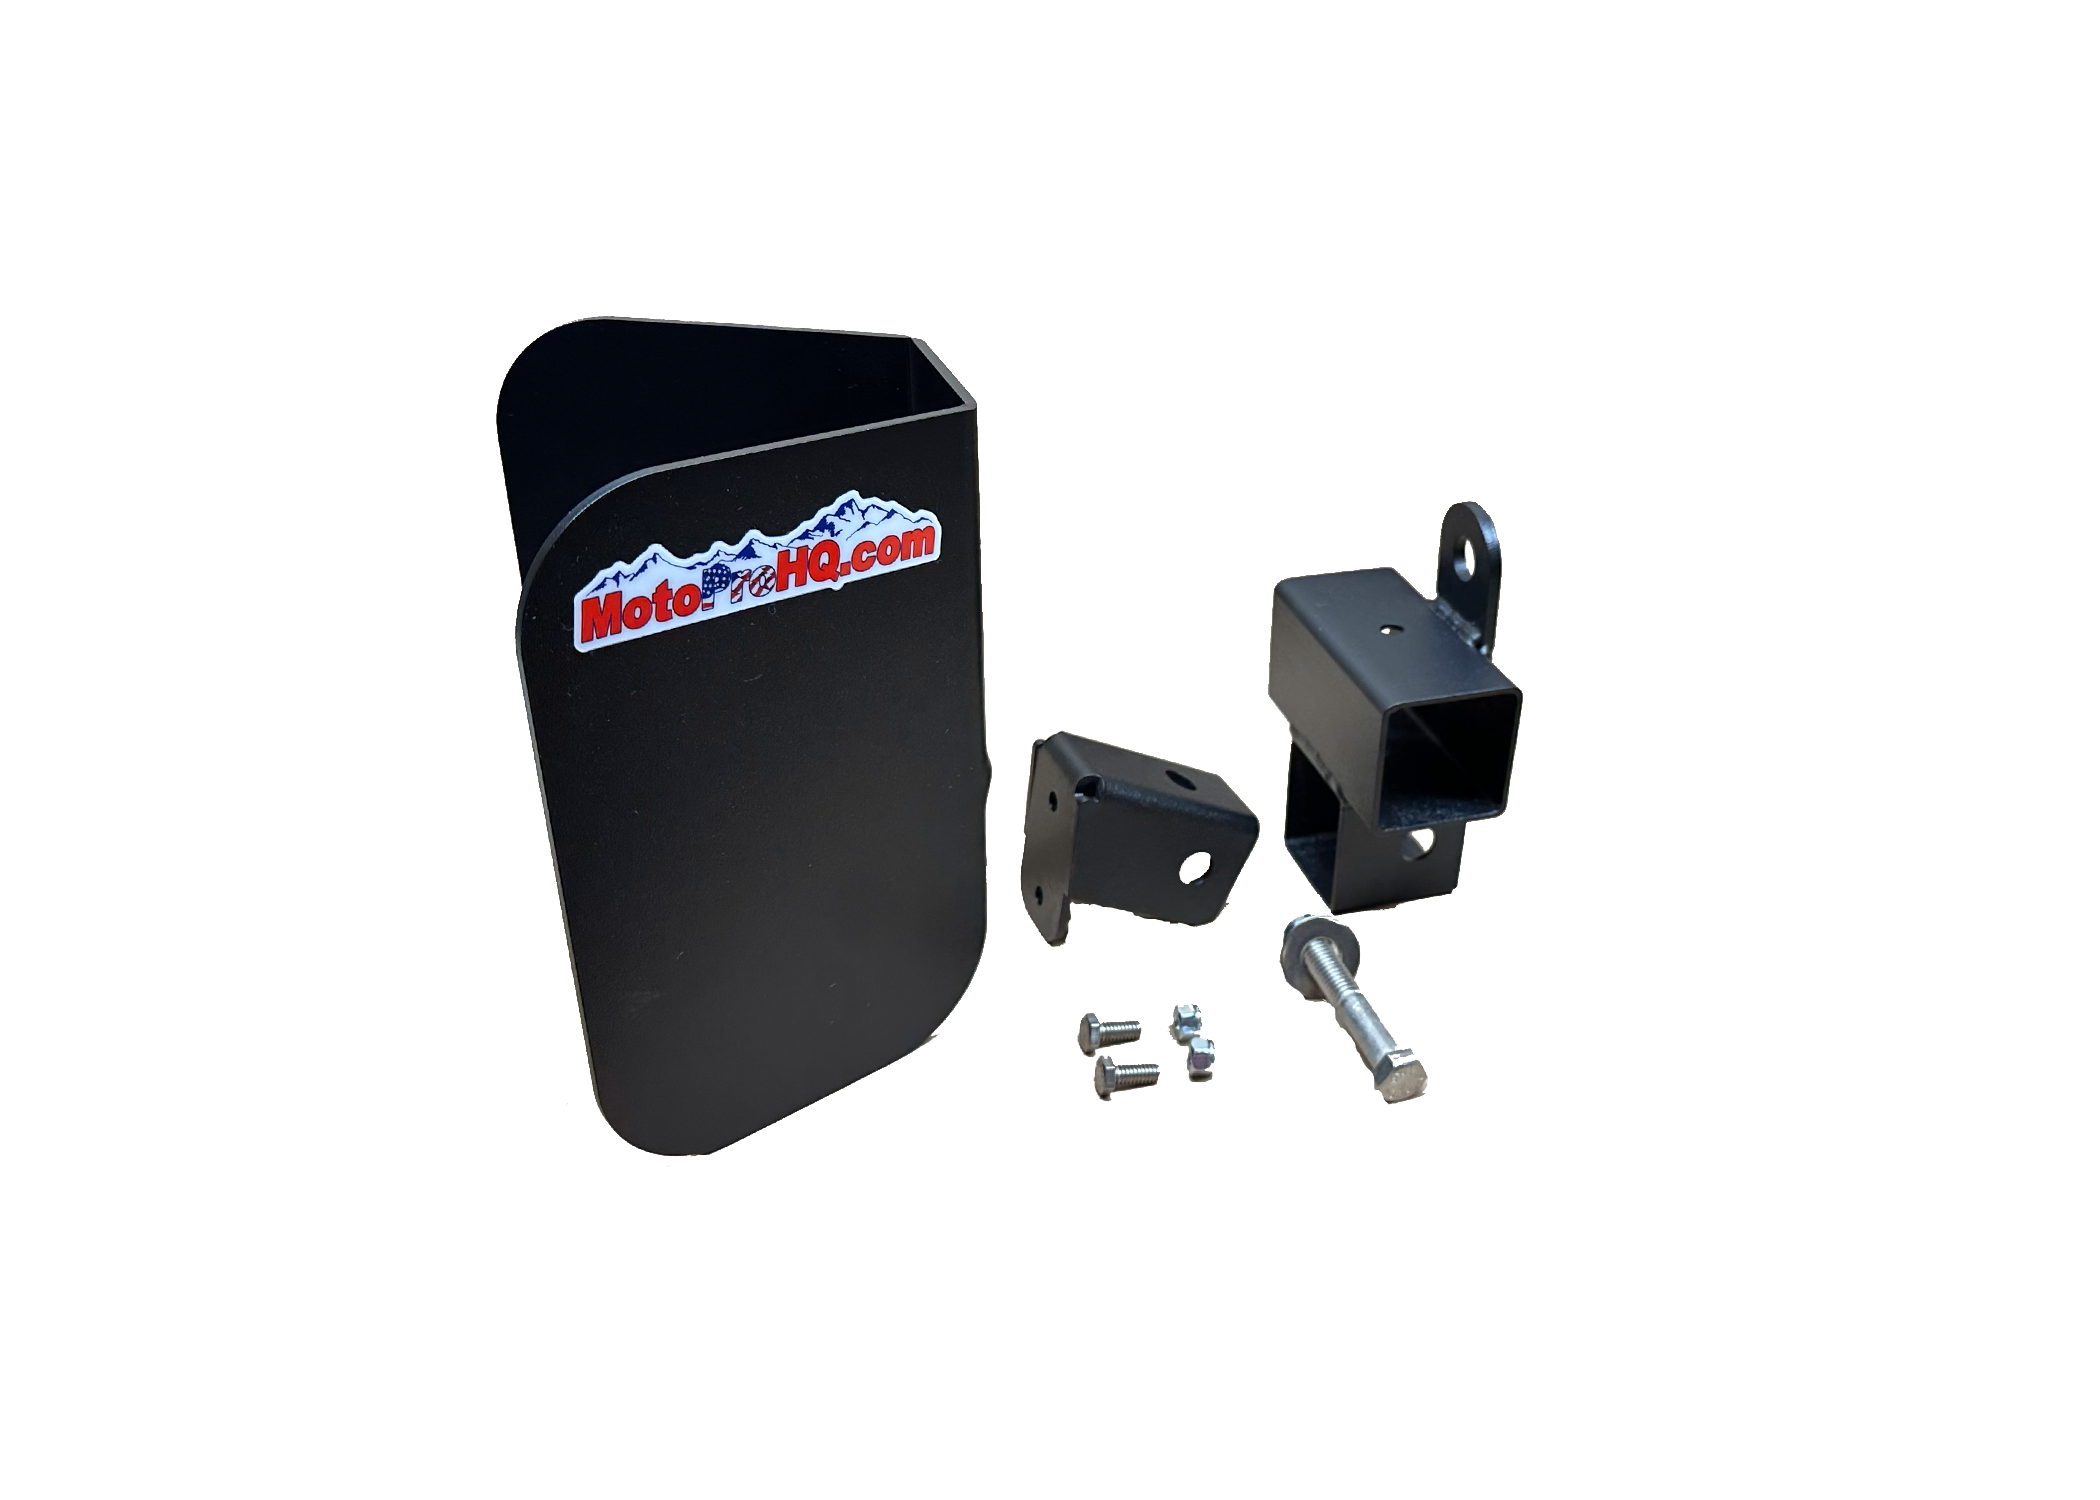 Portaequipajes para motocicletas NiceRack | Sistema de bolsillo de estaca